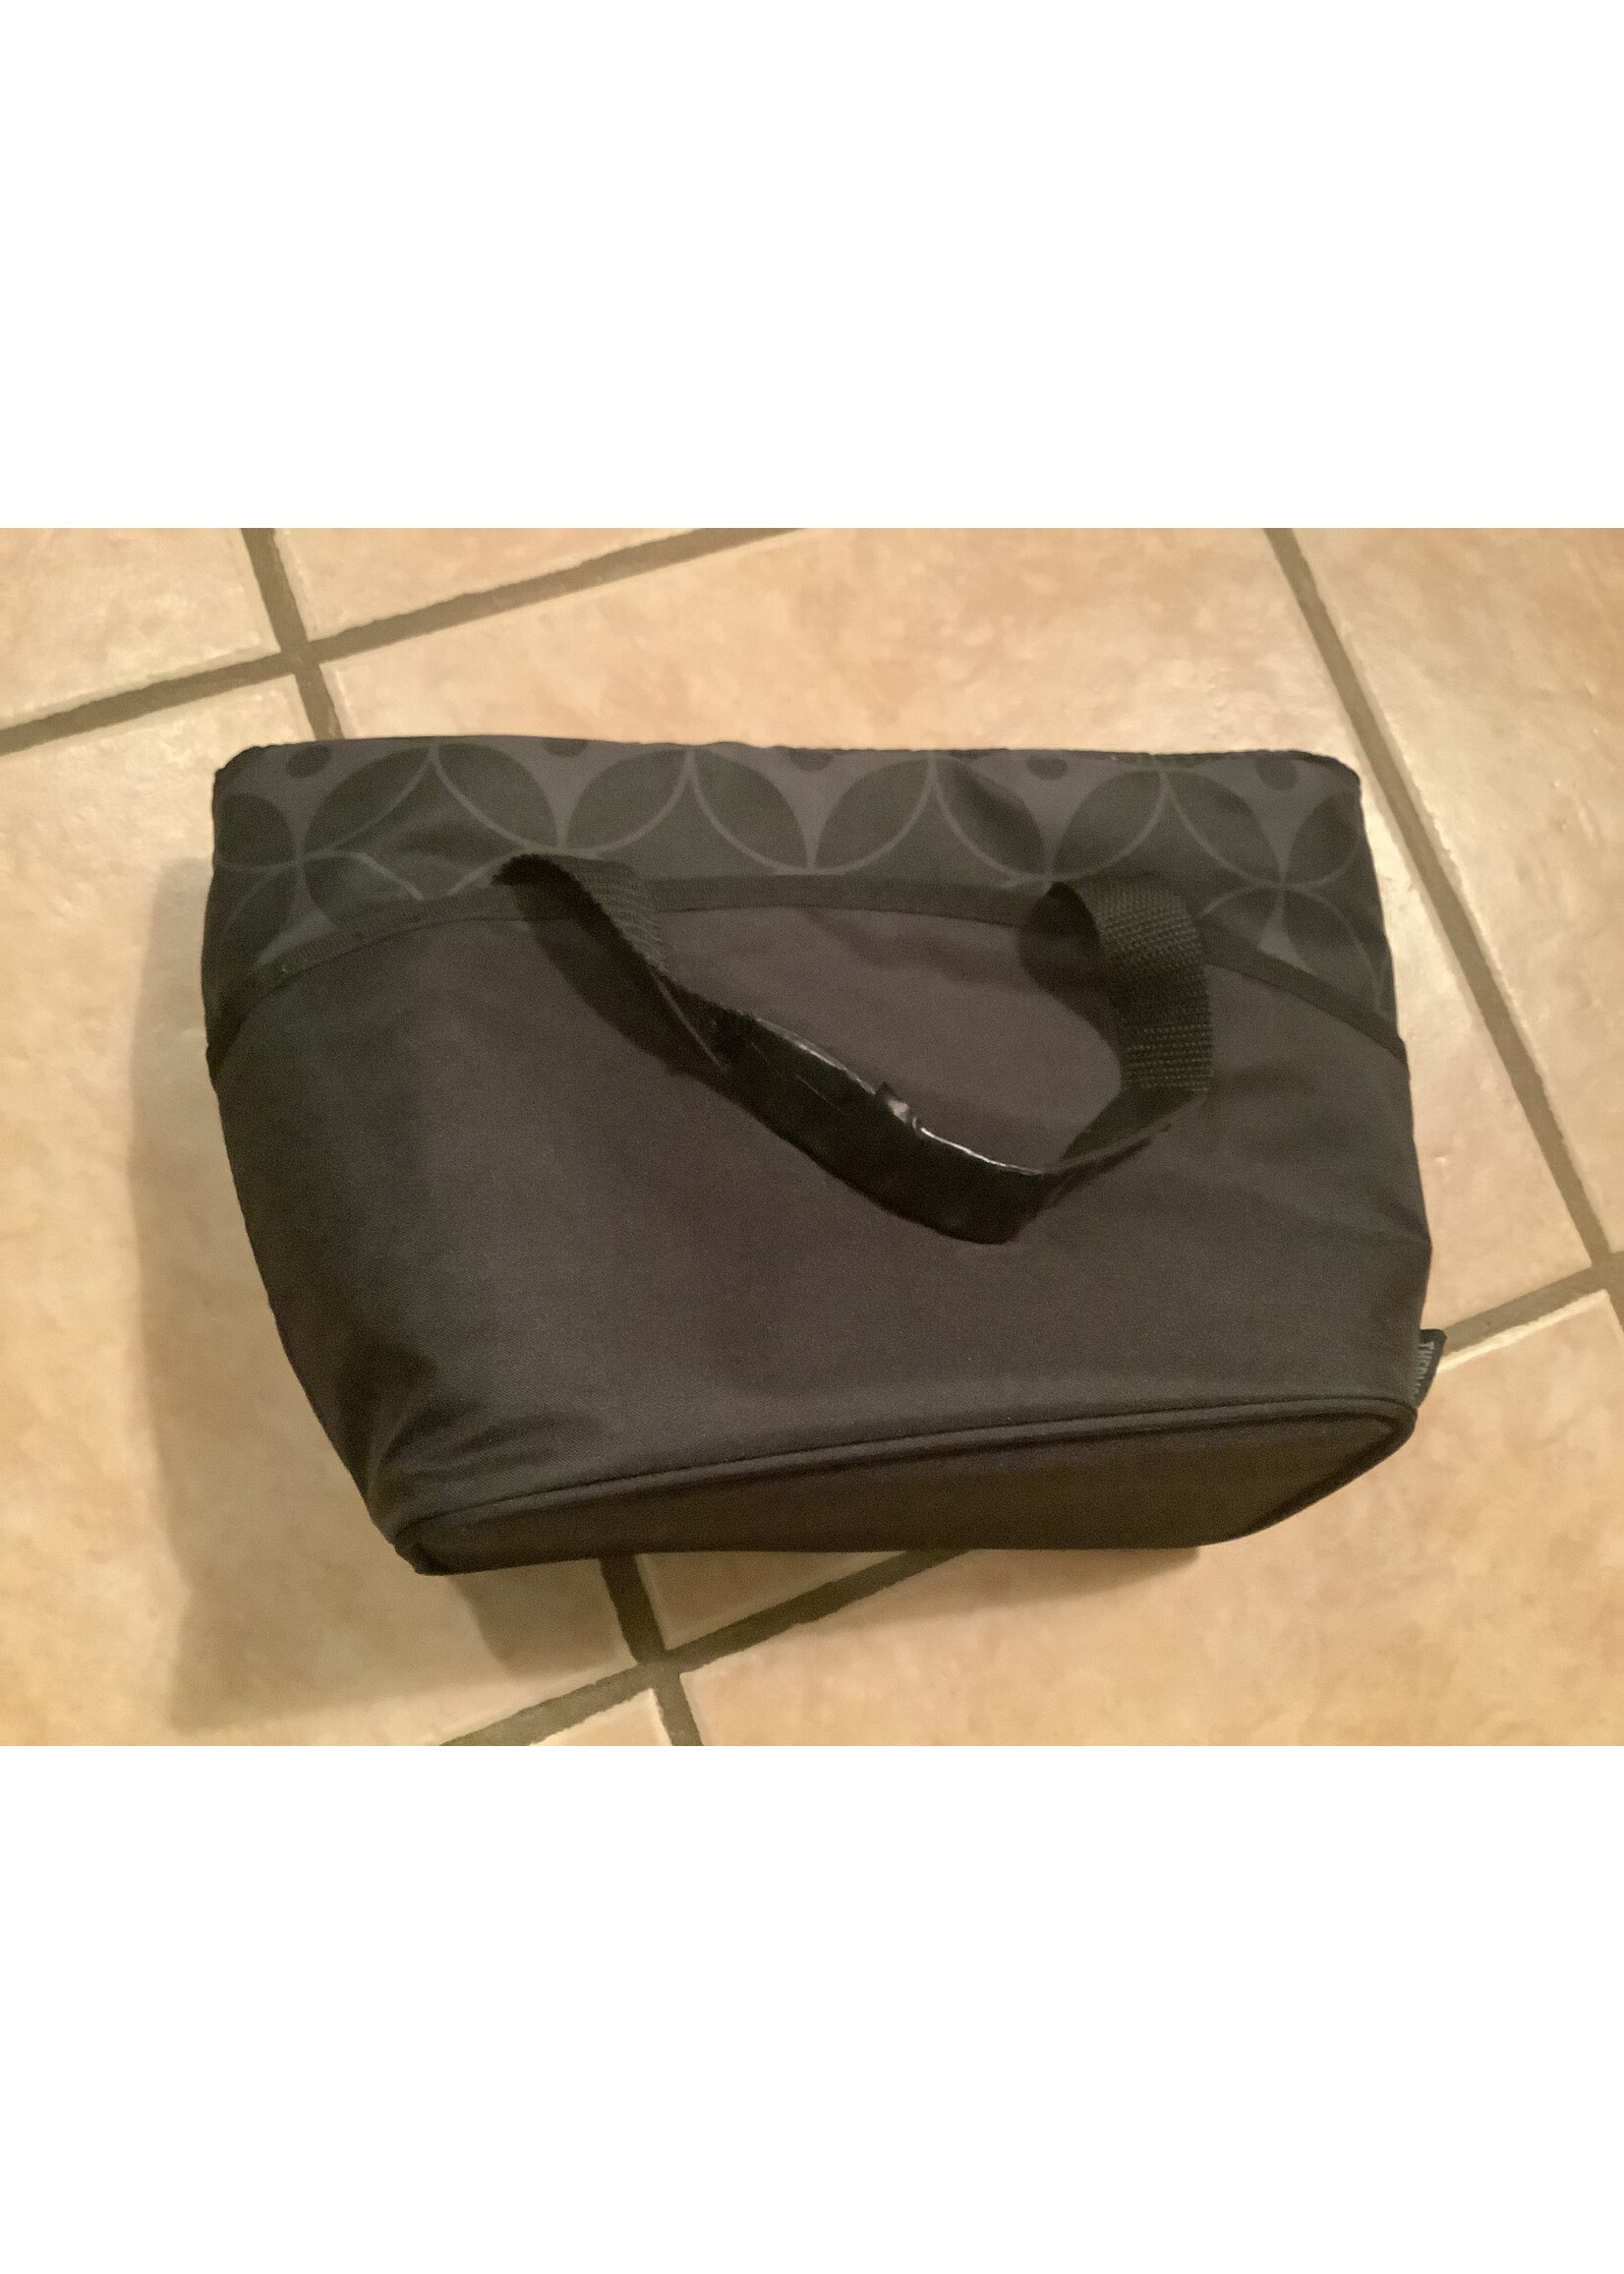 Black Lunch Bag (Electrical Tape Repair on Handle)